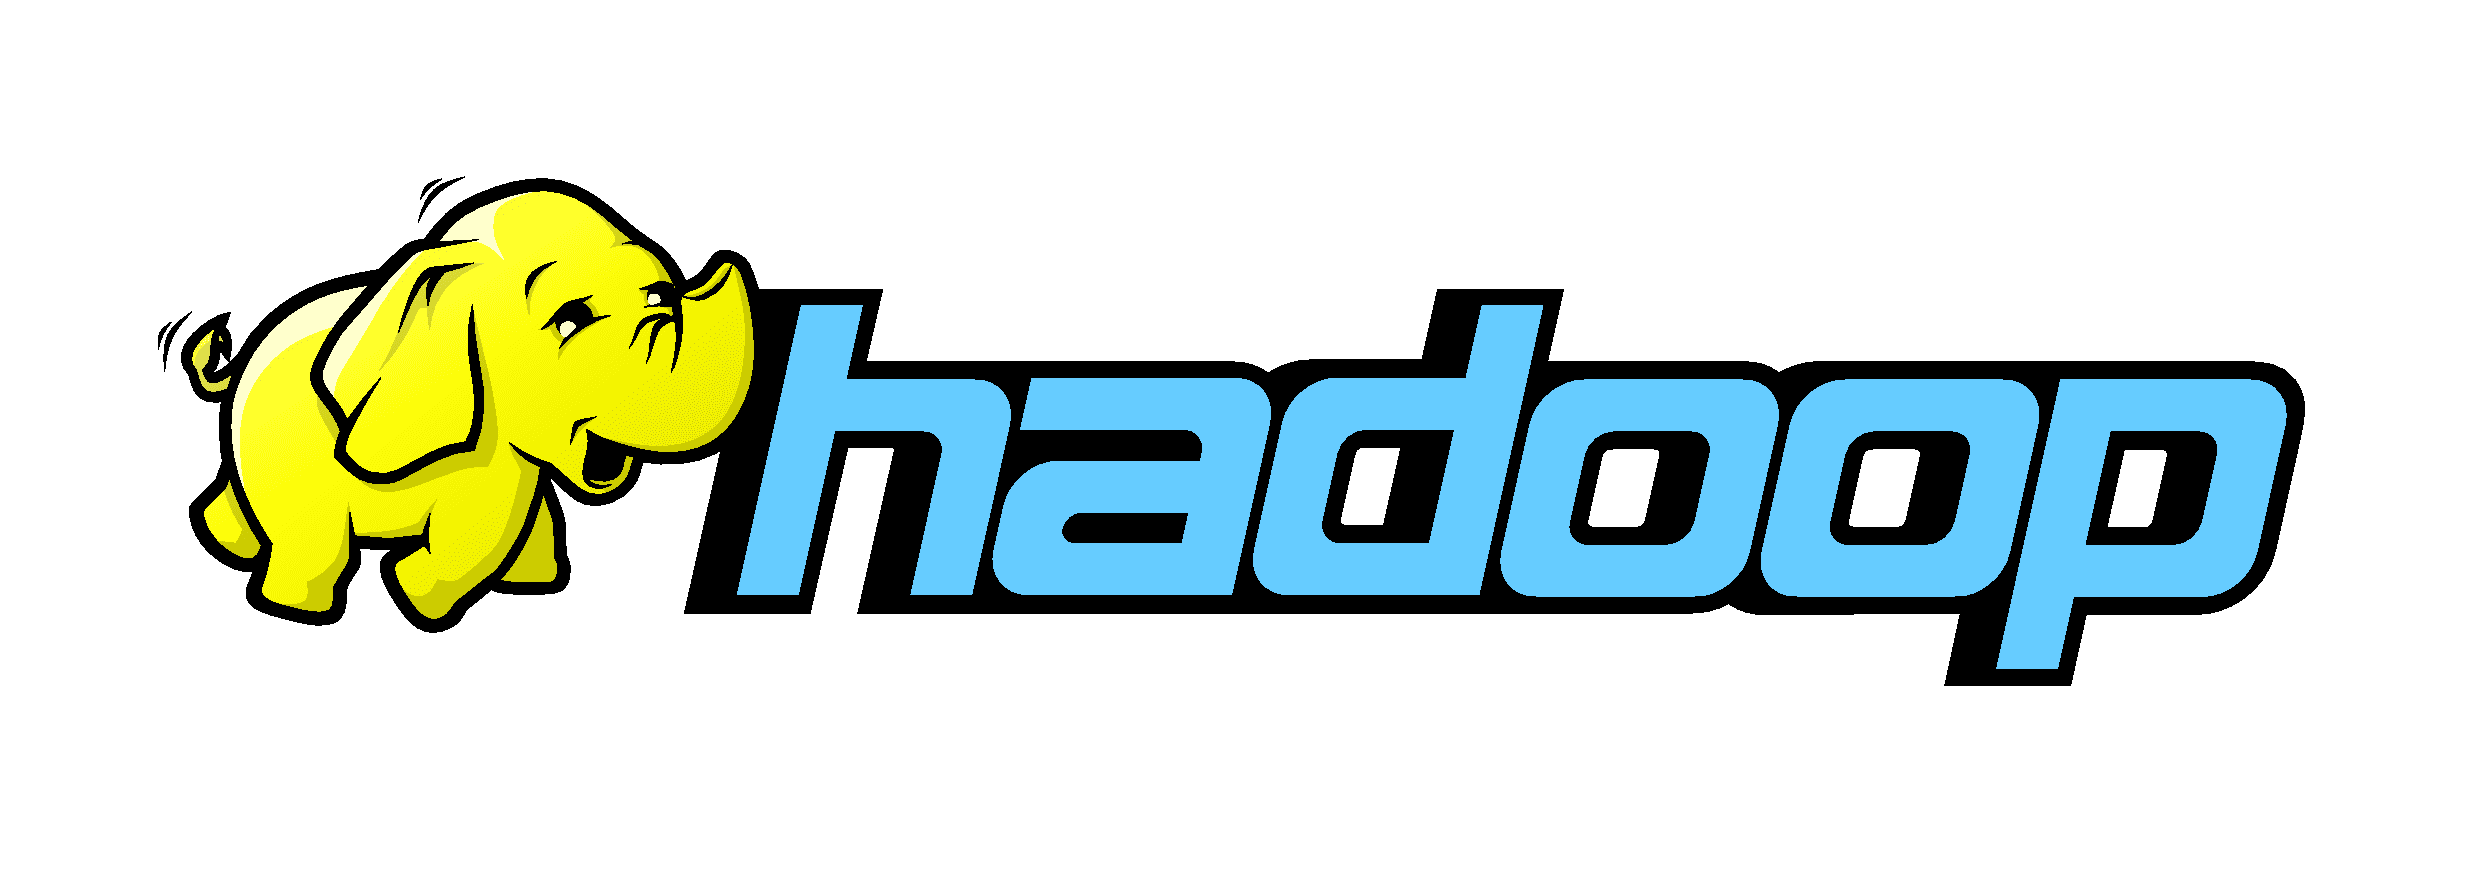 hadoop-elephant_logo